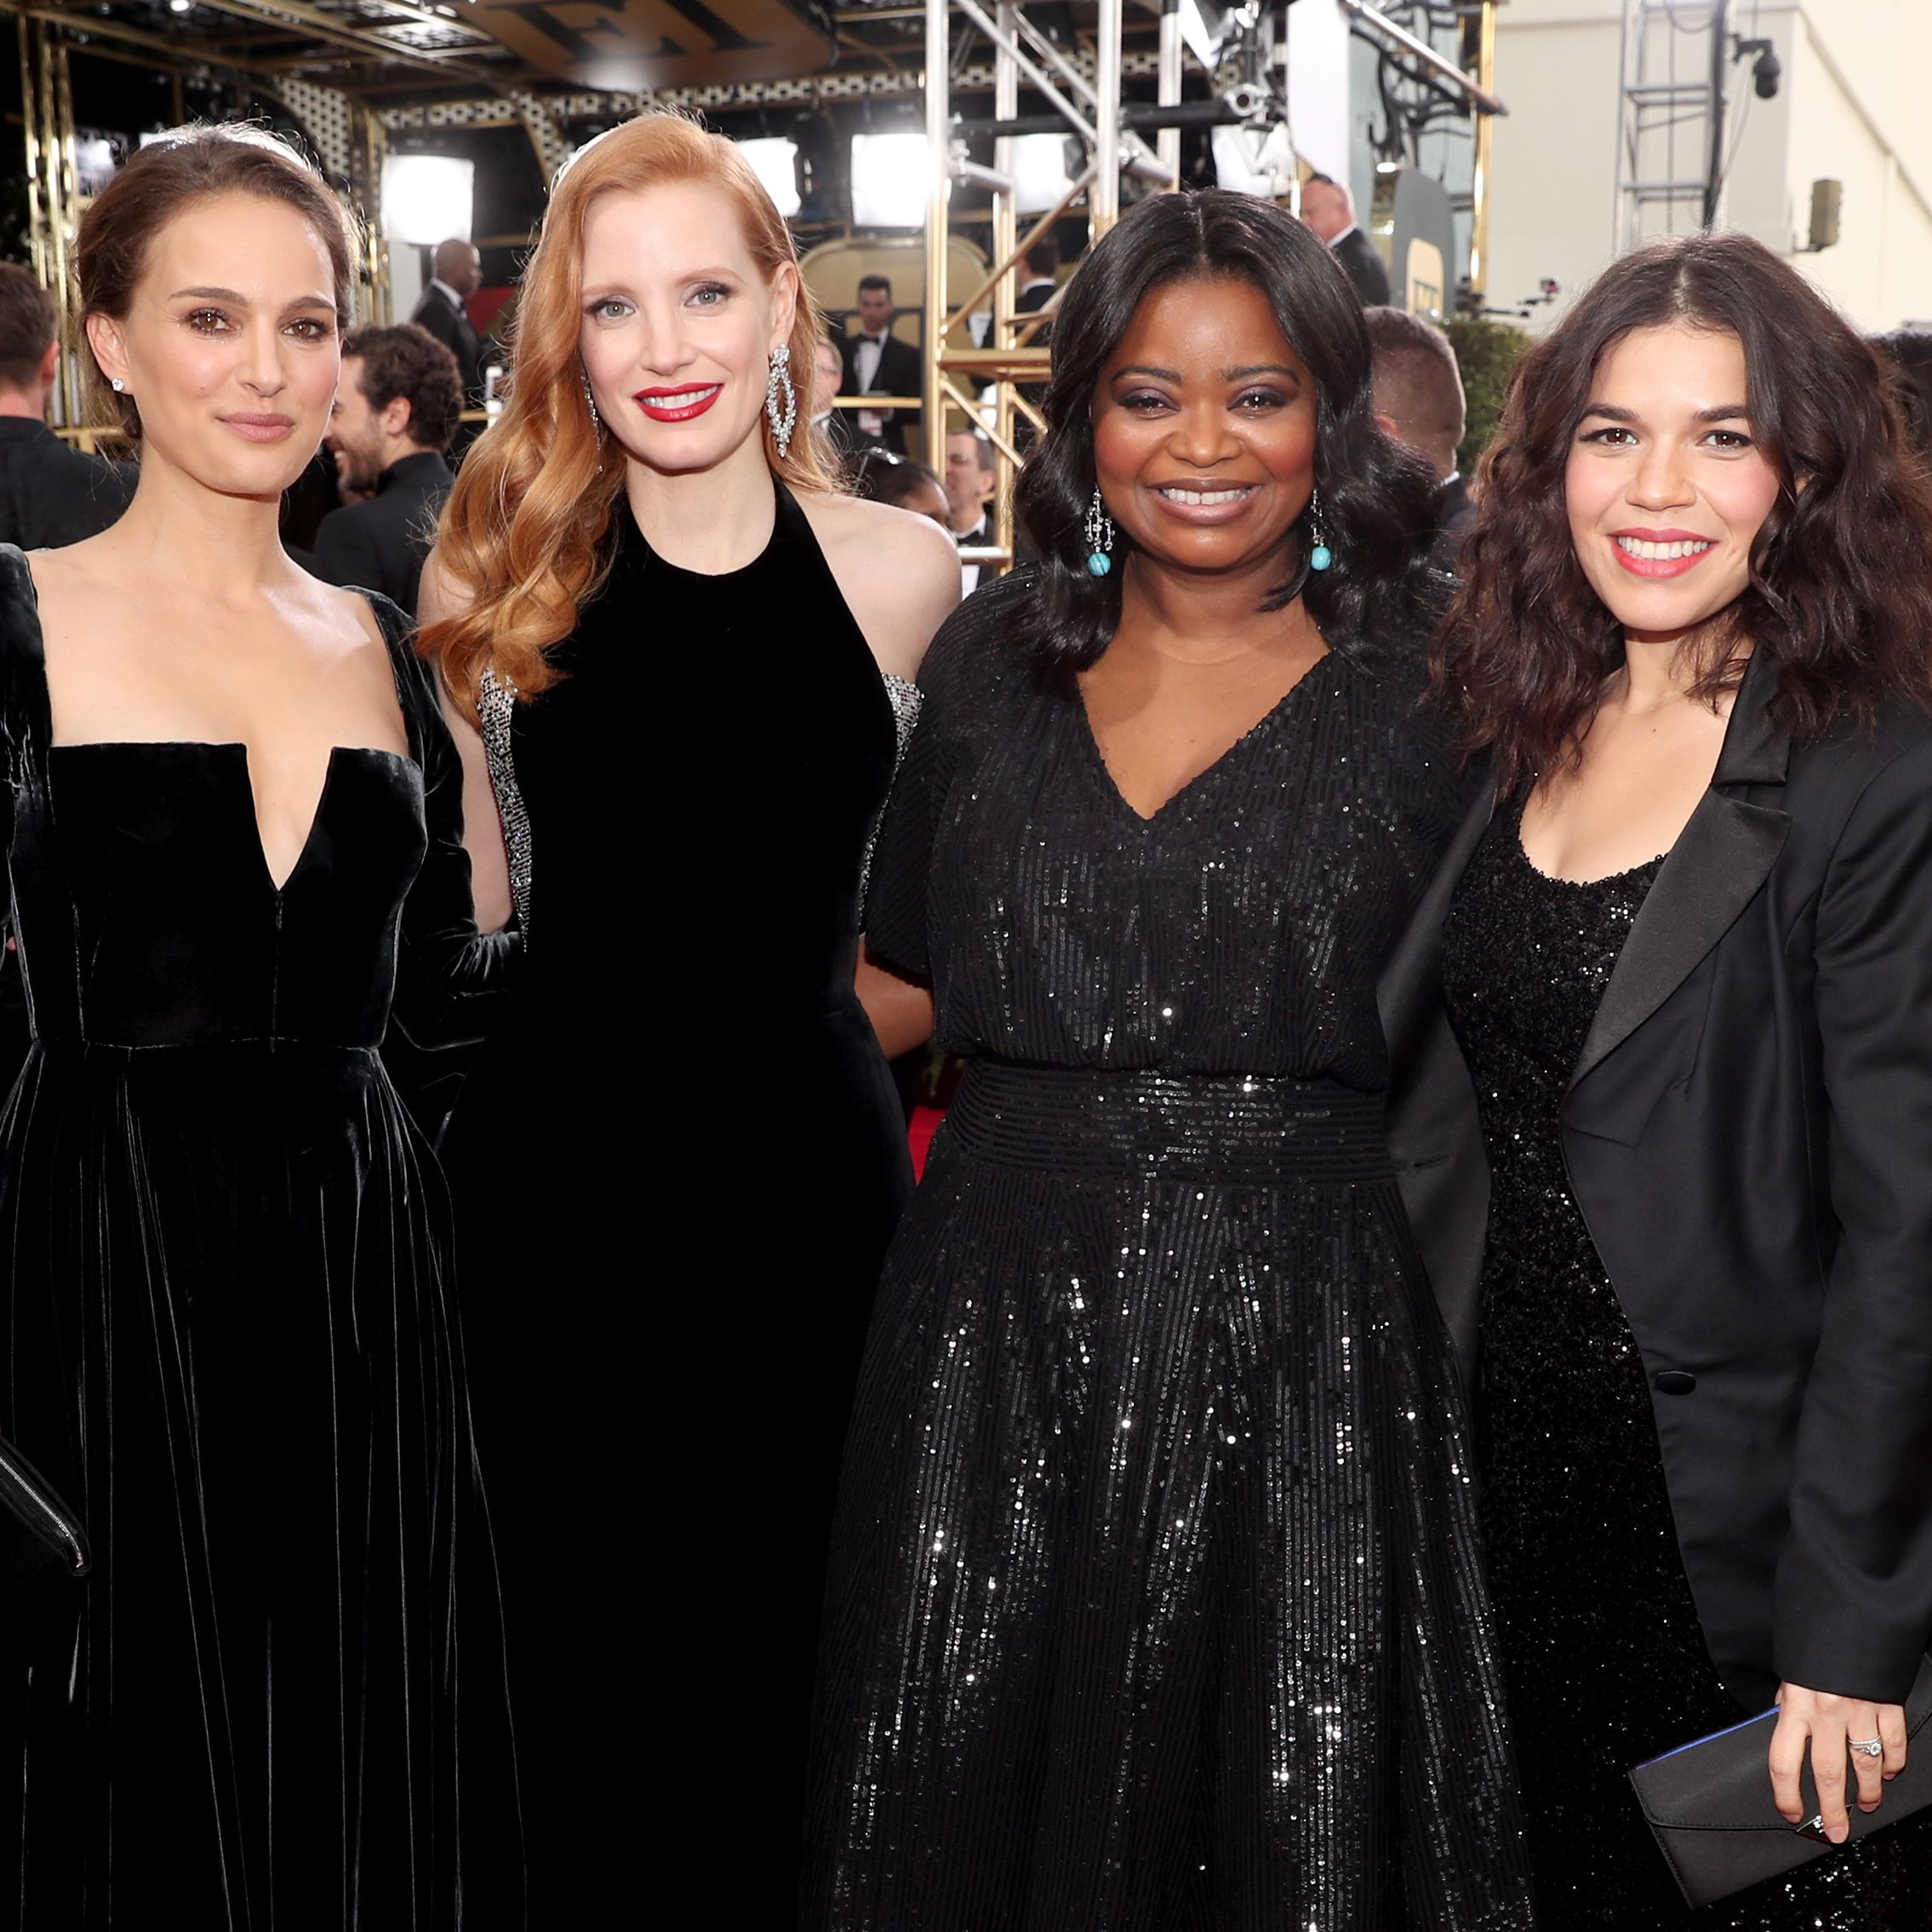 Millie Bobby Brown Wears Black Dress at Golden Globes 2018